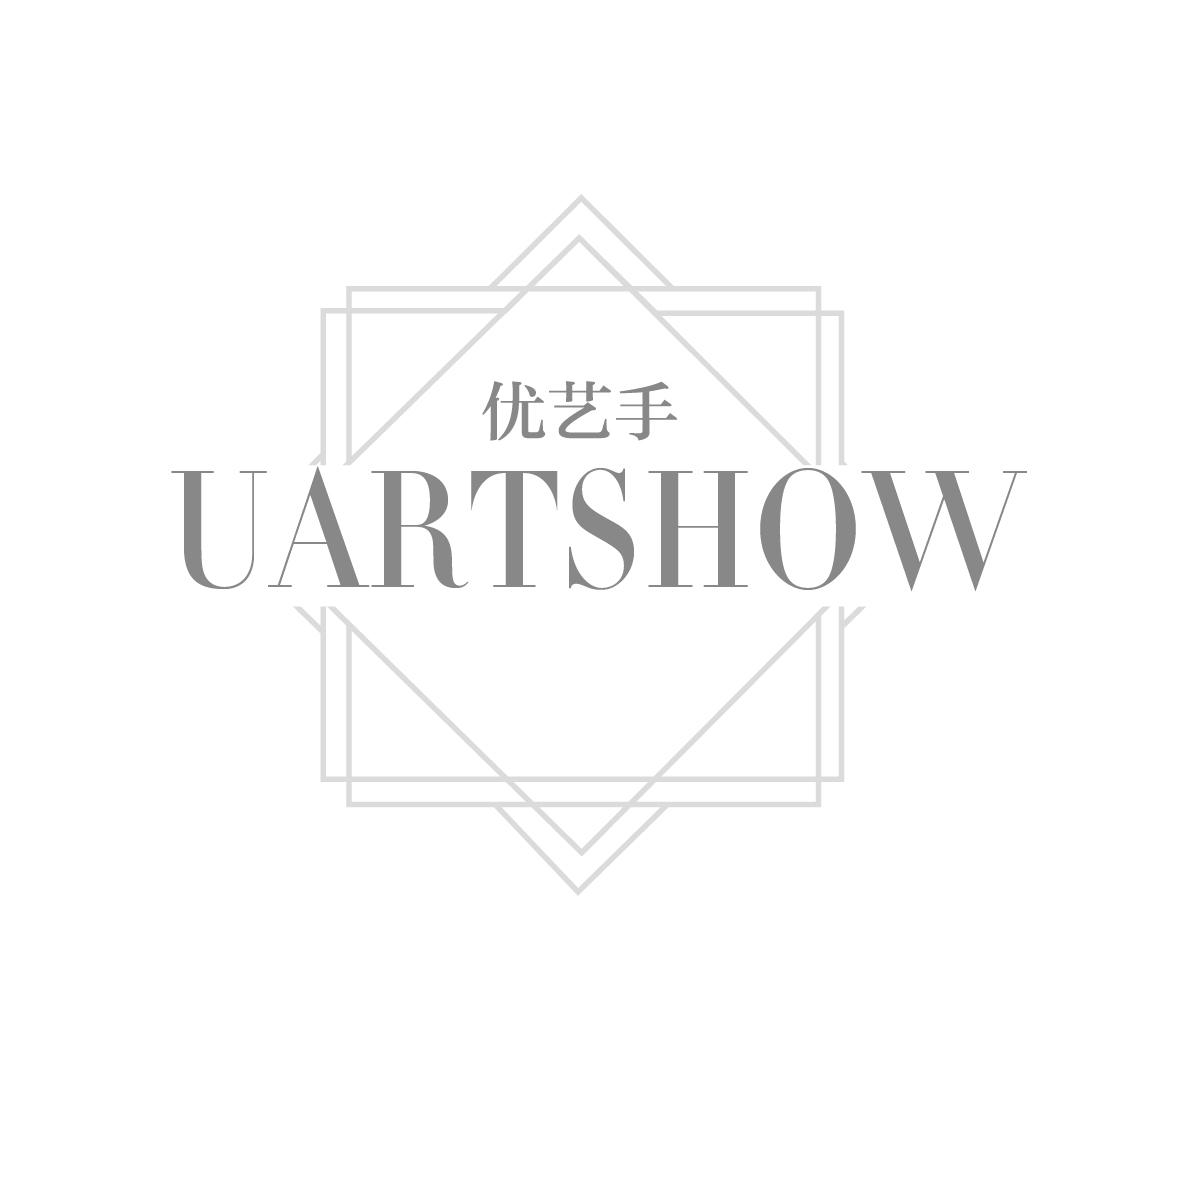  UARTSHOW